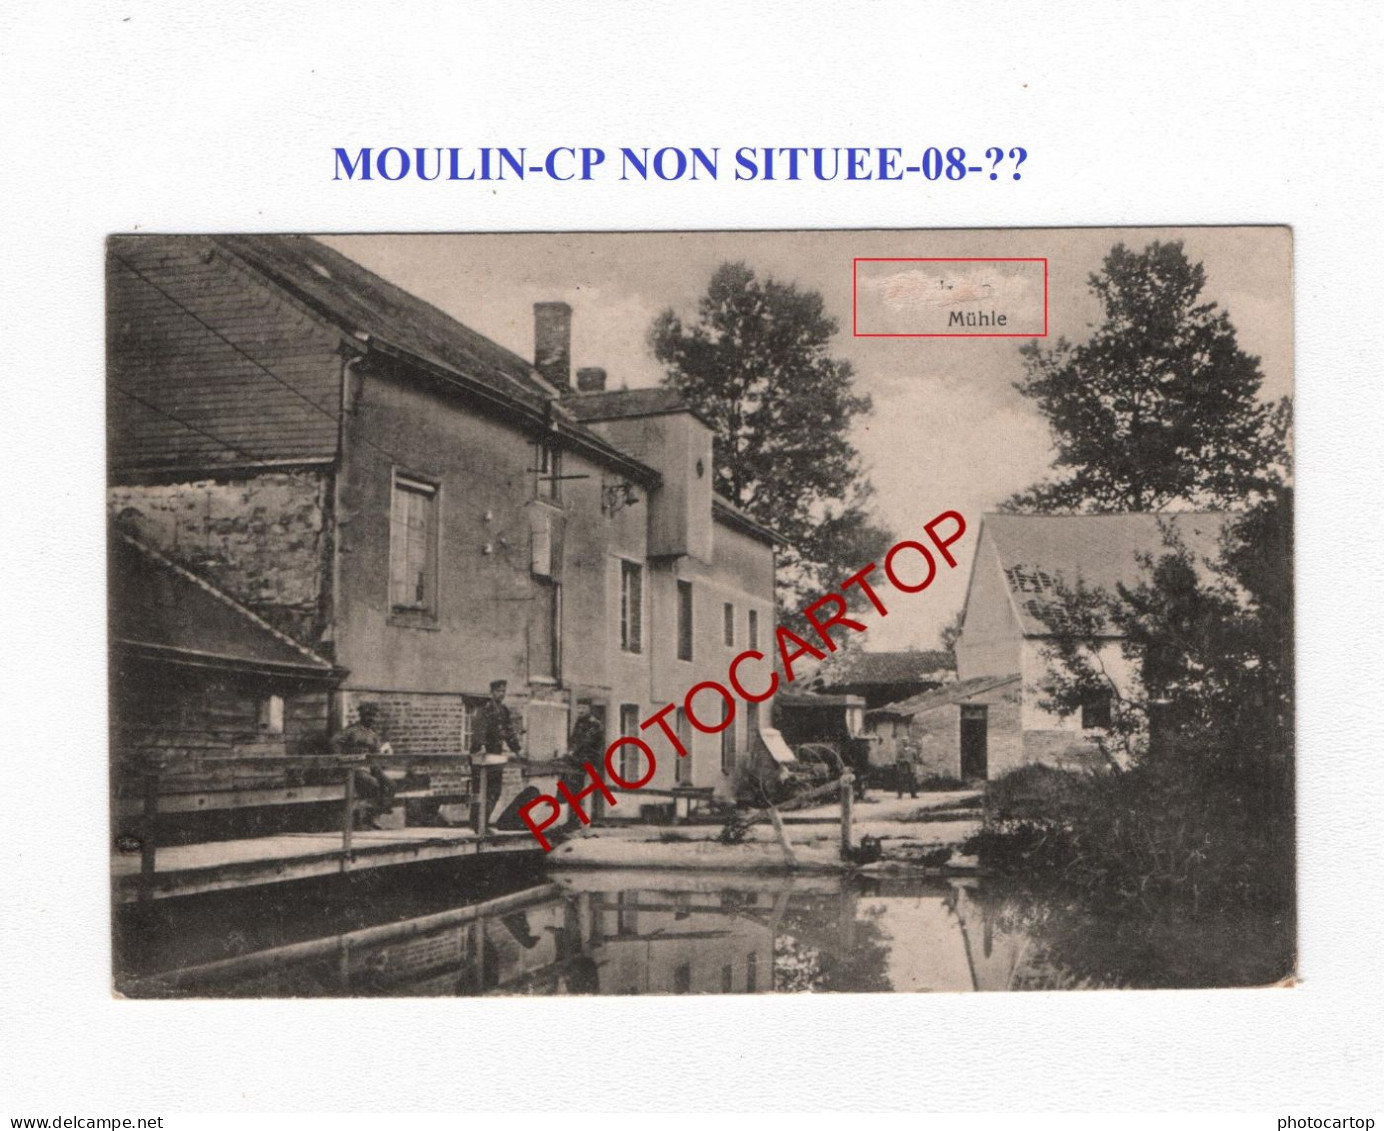 Moulin-CP NON SITUEE-08-??-CARTE Imprimee Allemande-Guerre 14-18-1 WK-France-FELDPOST - Wassermühlen